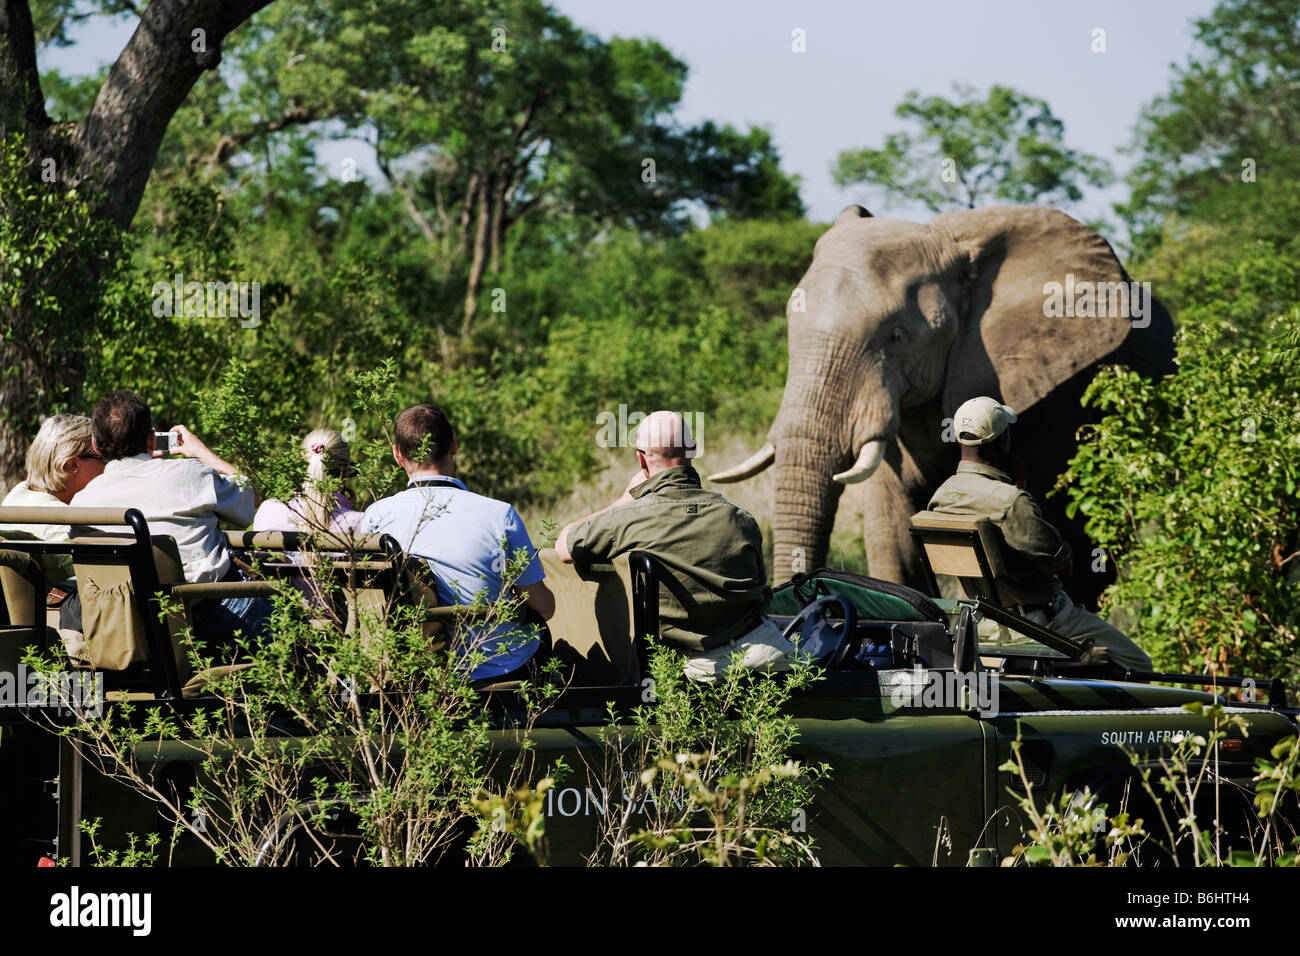 Elefant Loxodonta Africana Touristen auf eine Pirschfahrt Fotografieren ein Elefant Südafrika Dist Sub-Sahara-Afrika Stockfoto